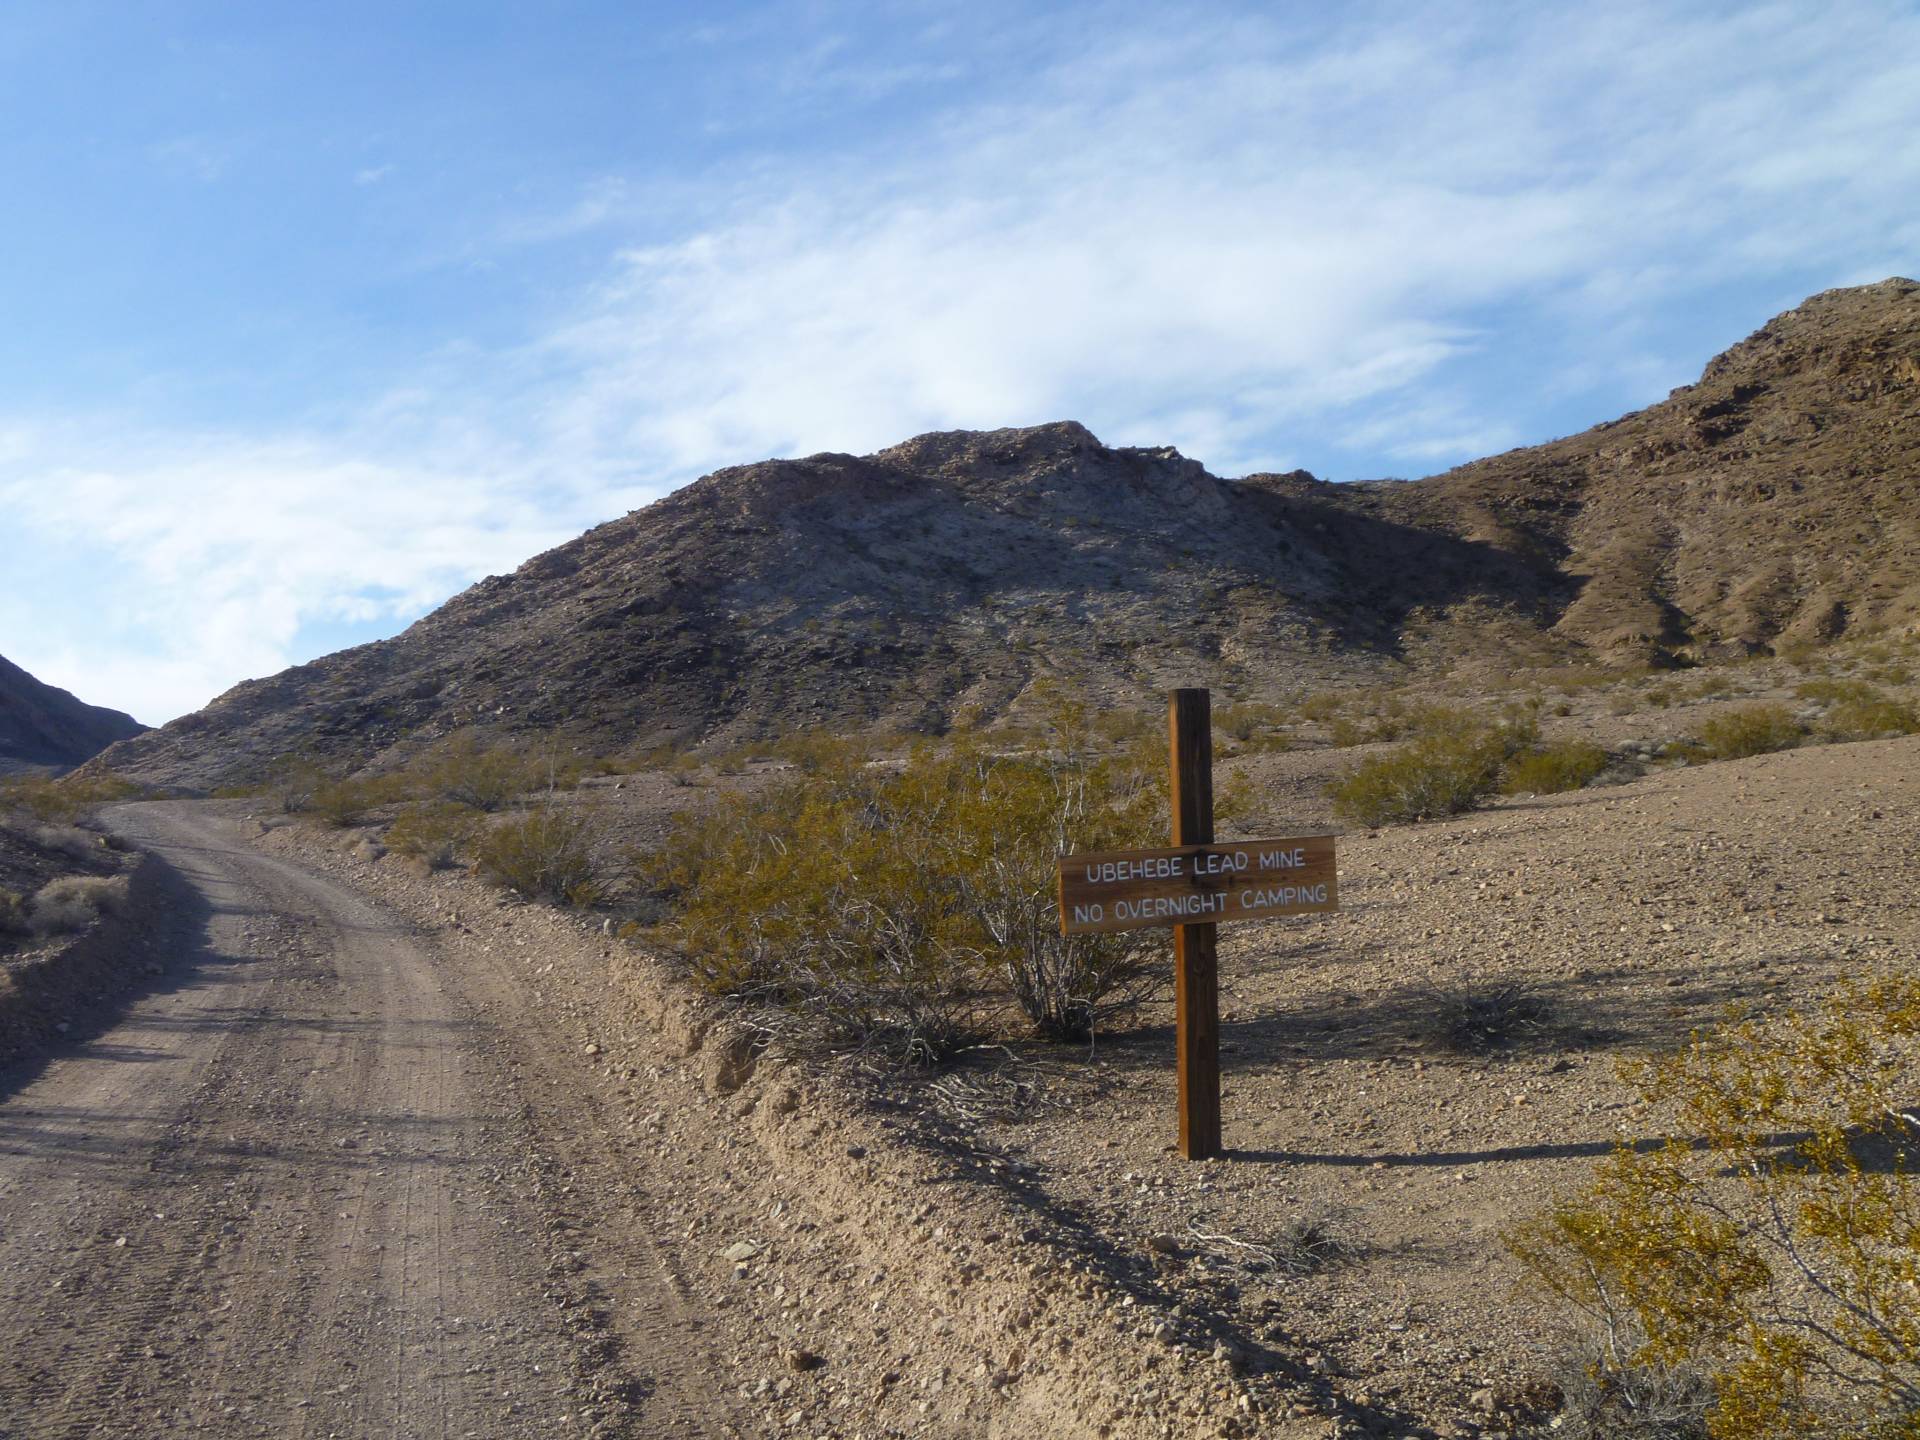 Ubehebe Lead Mine Road, Death Valley National Park, California